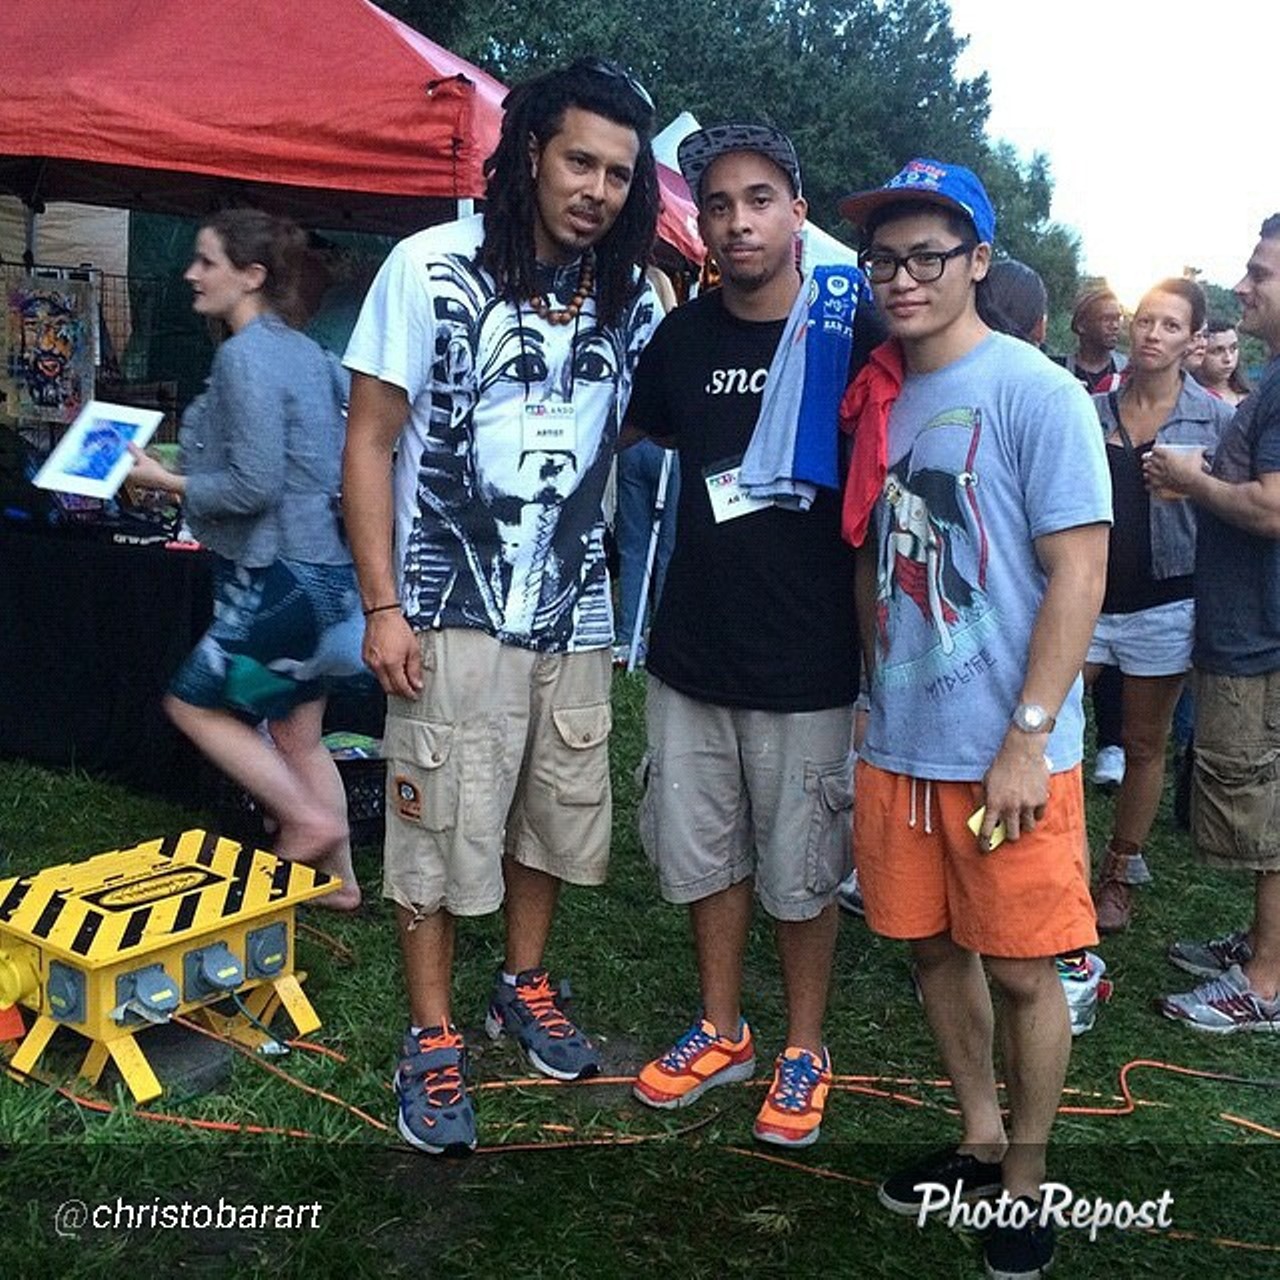 German Lemus, Chris Tobar Rodriguez and Boy Kong at Artlando.
Instagram: dennabeena